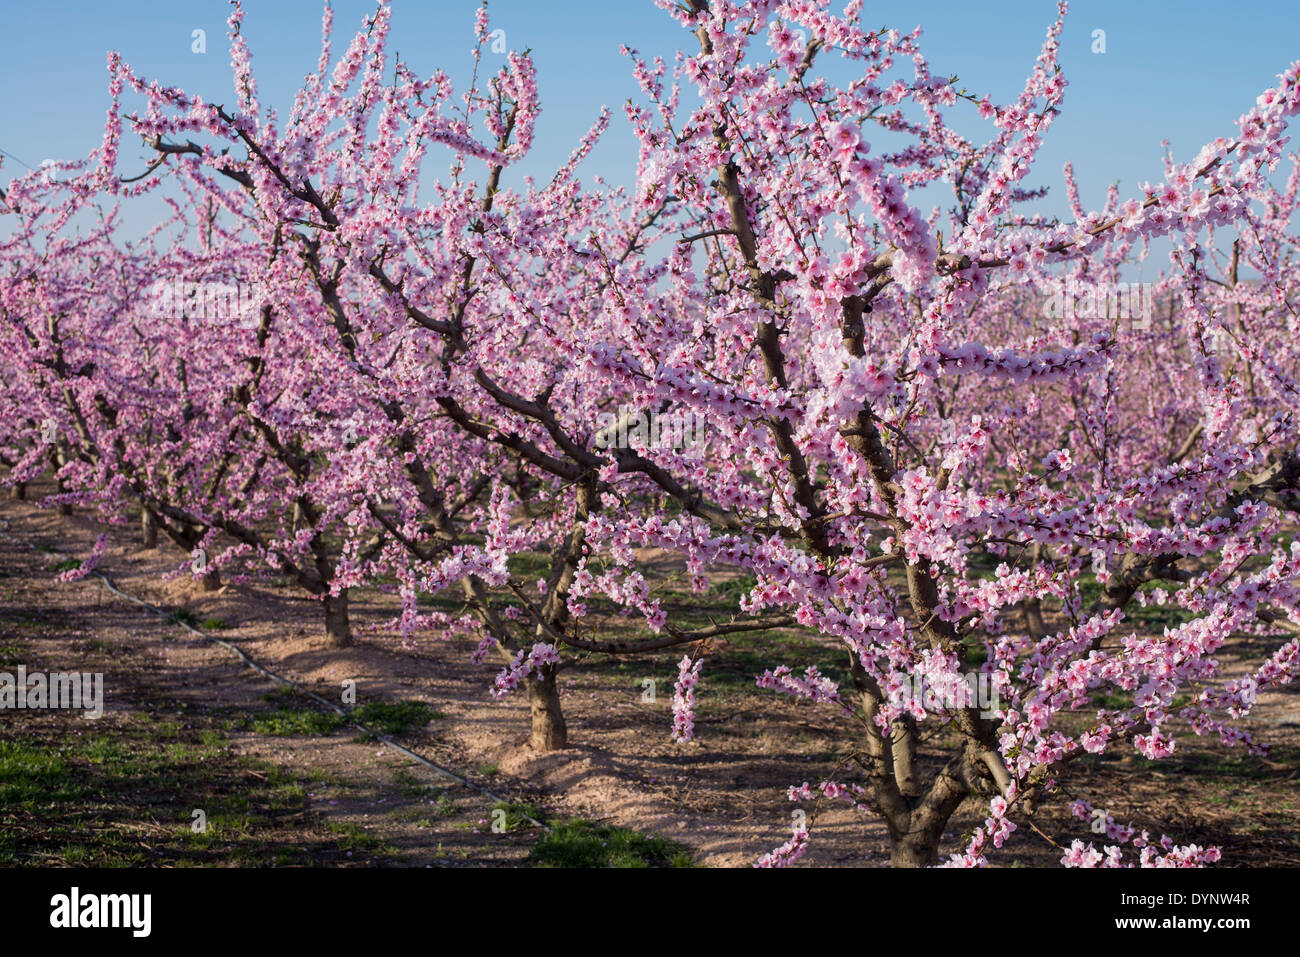 Field of Peach trees (Prunus persica) flowered in early Spring, Fraga, Spain Stock Photo